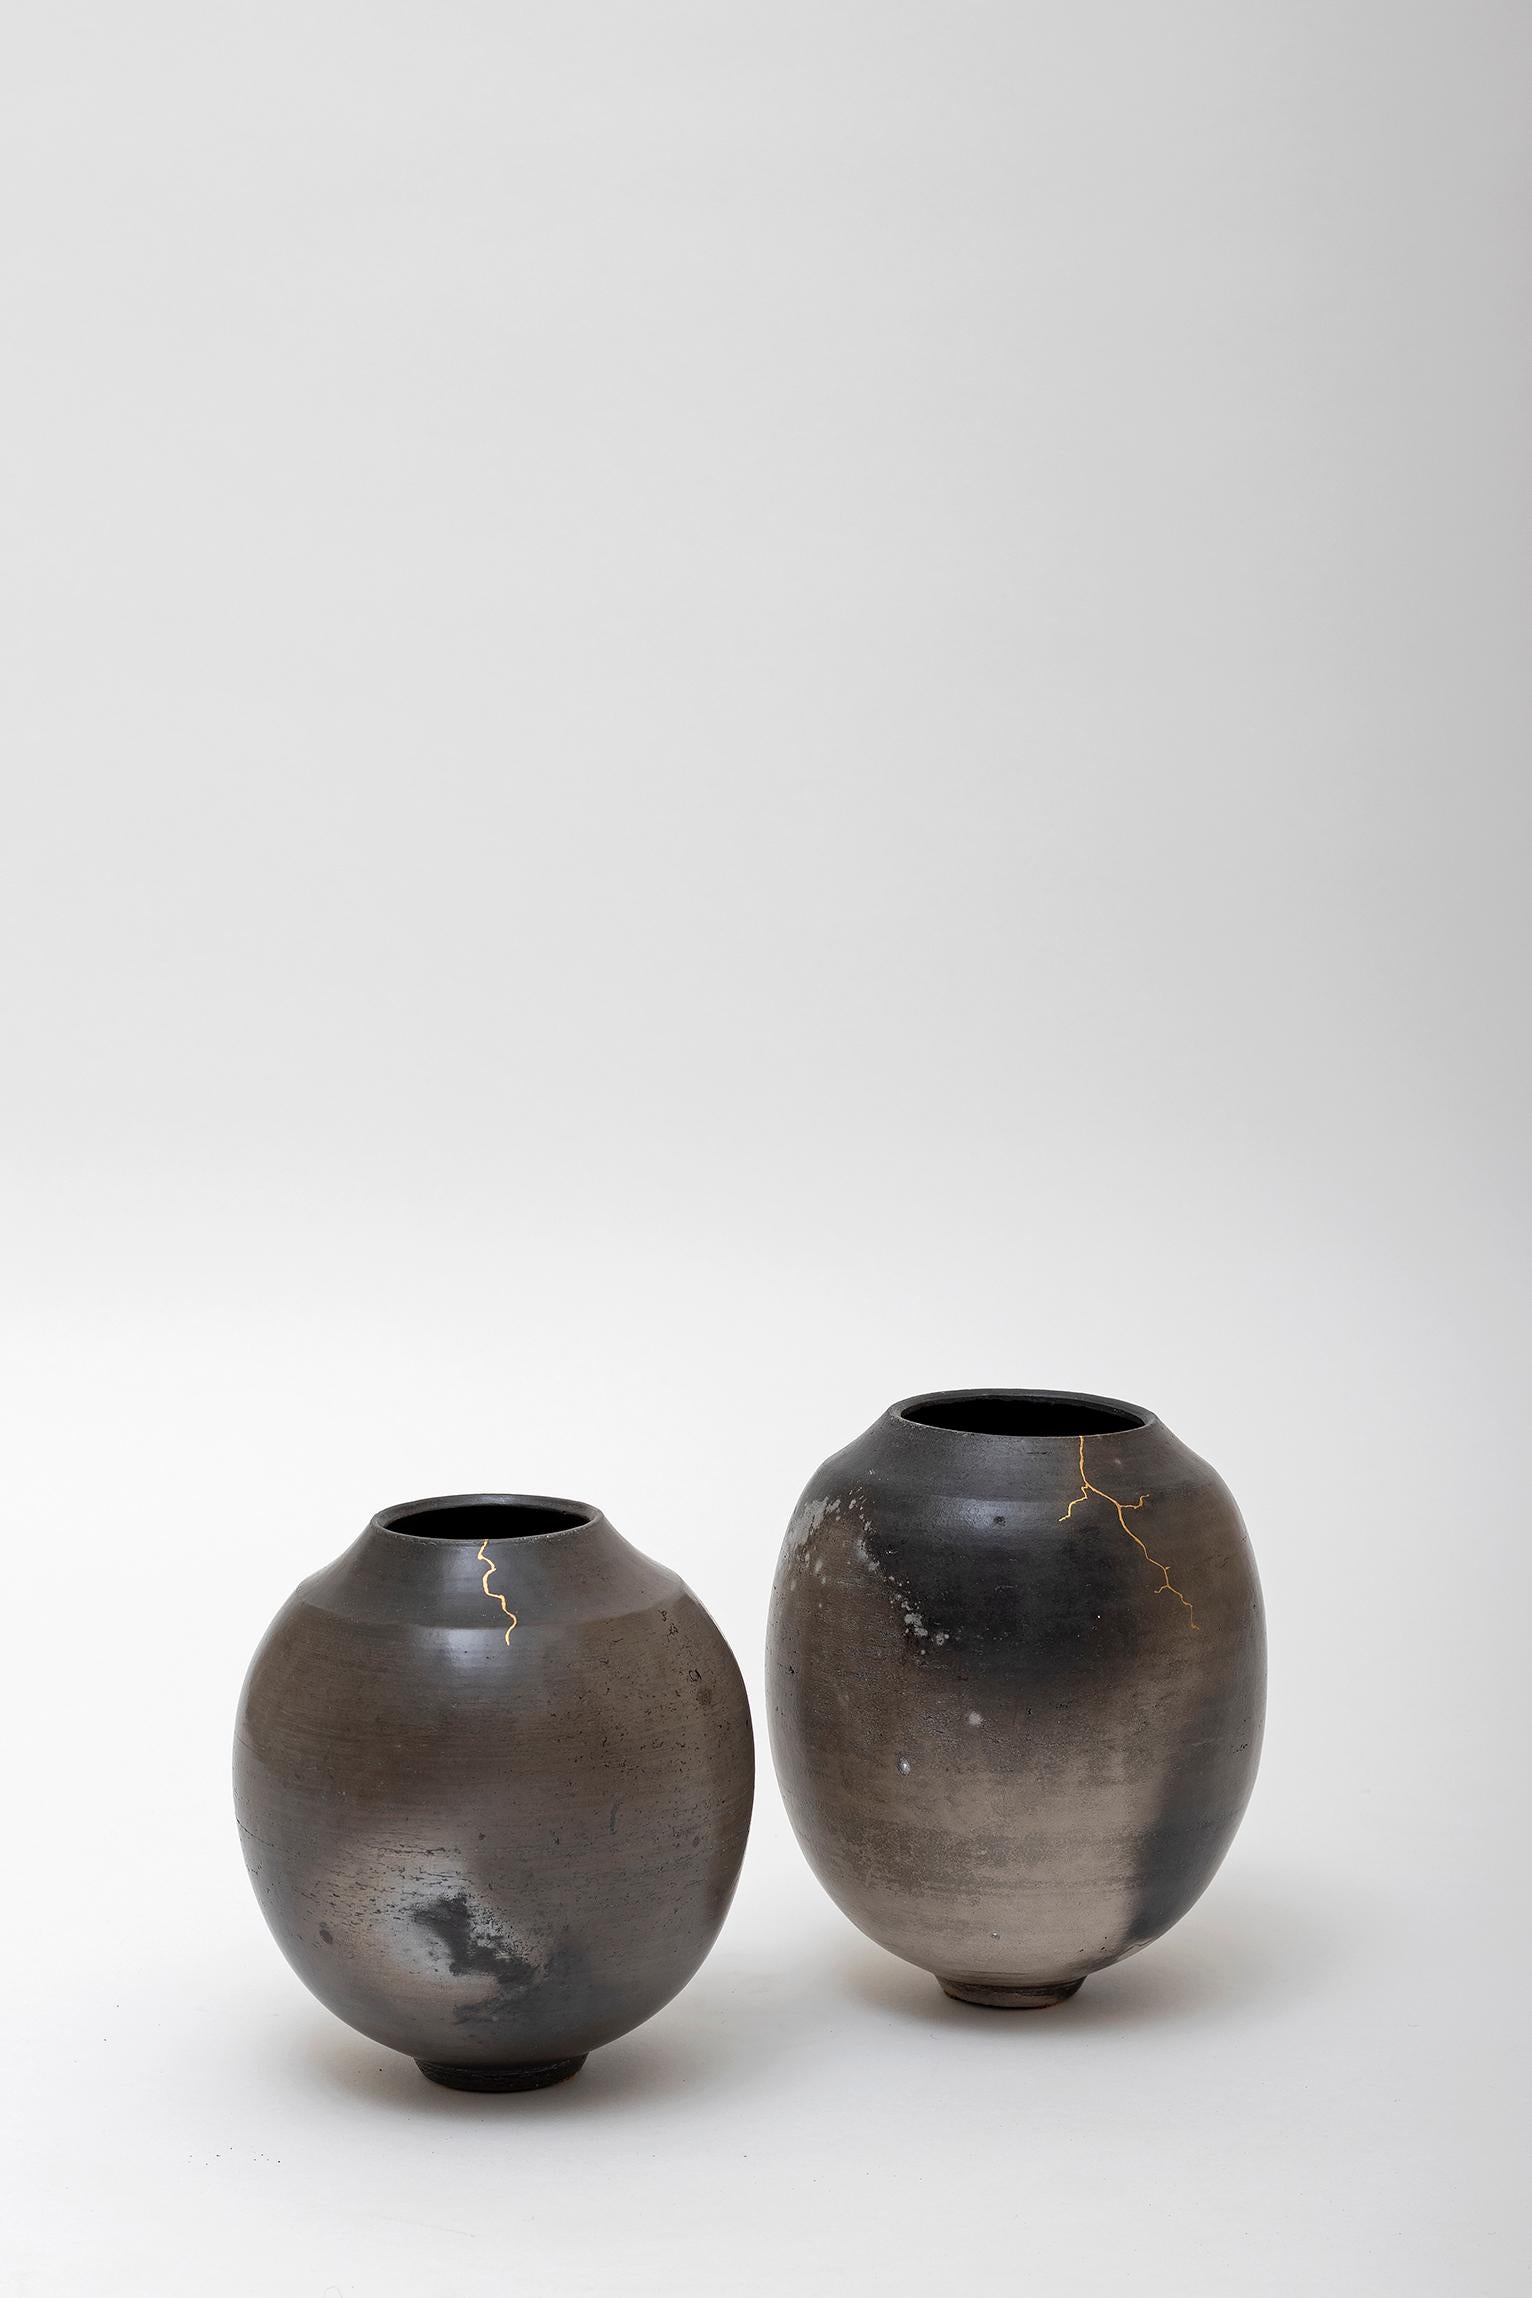 Kintsugi Ceramic Vase by Karen Swami 2